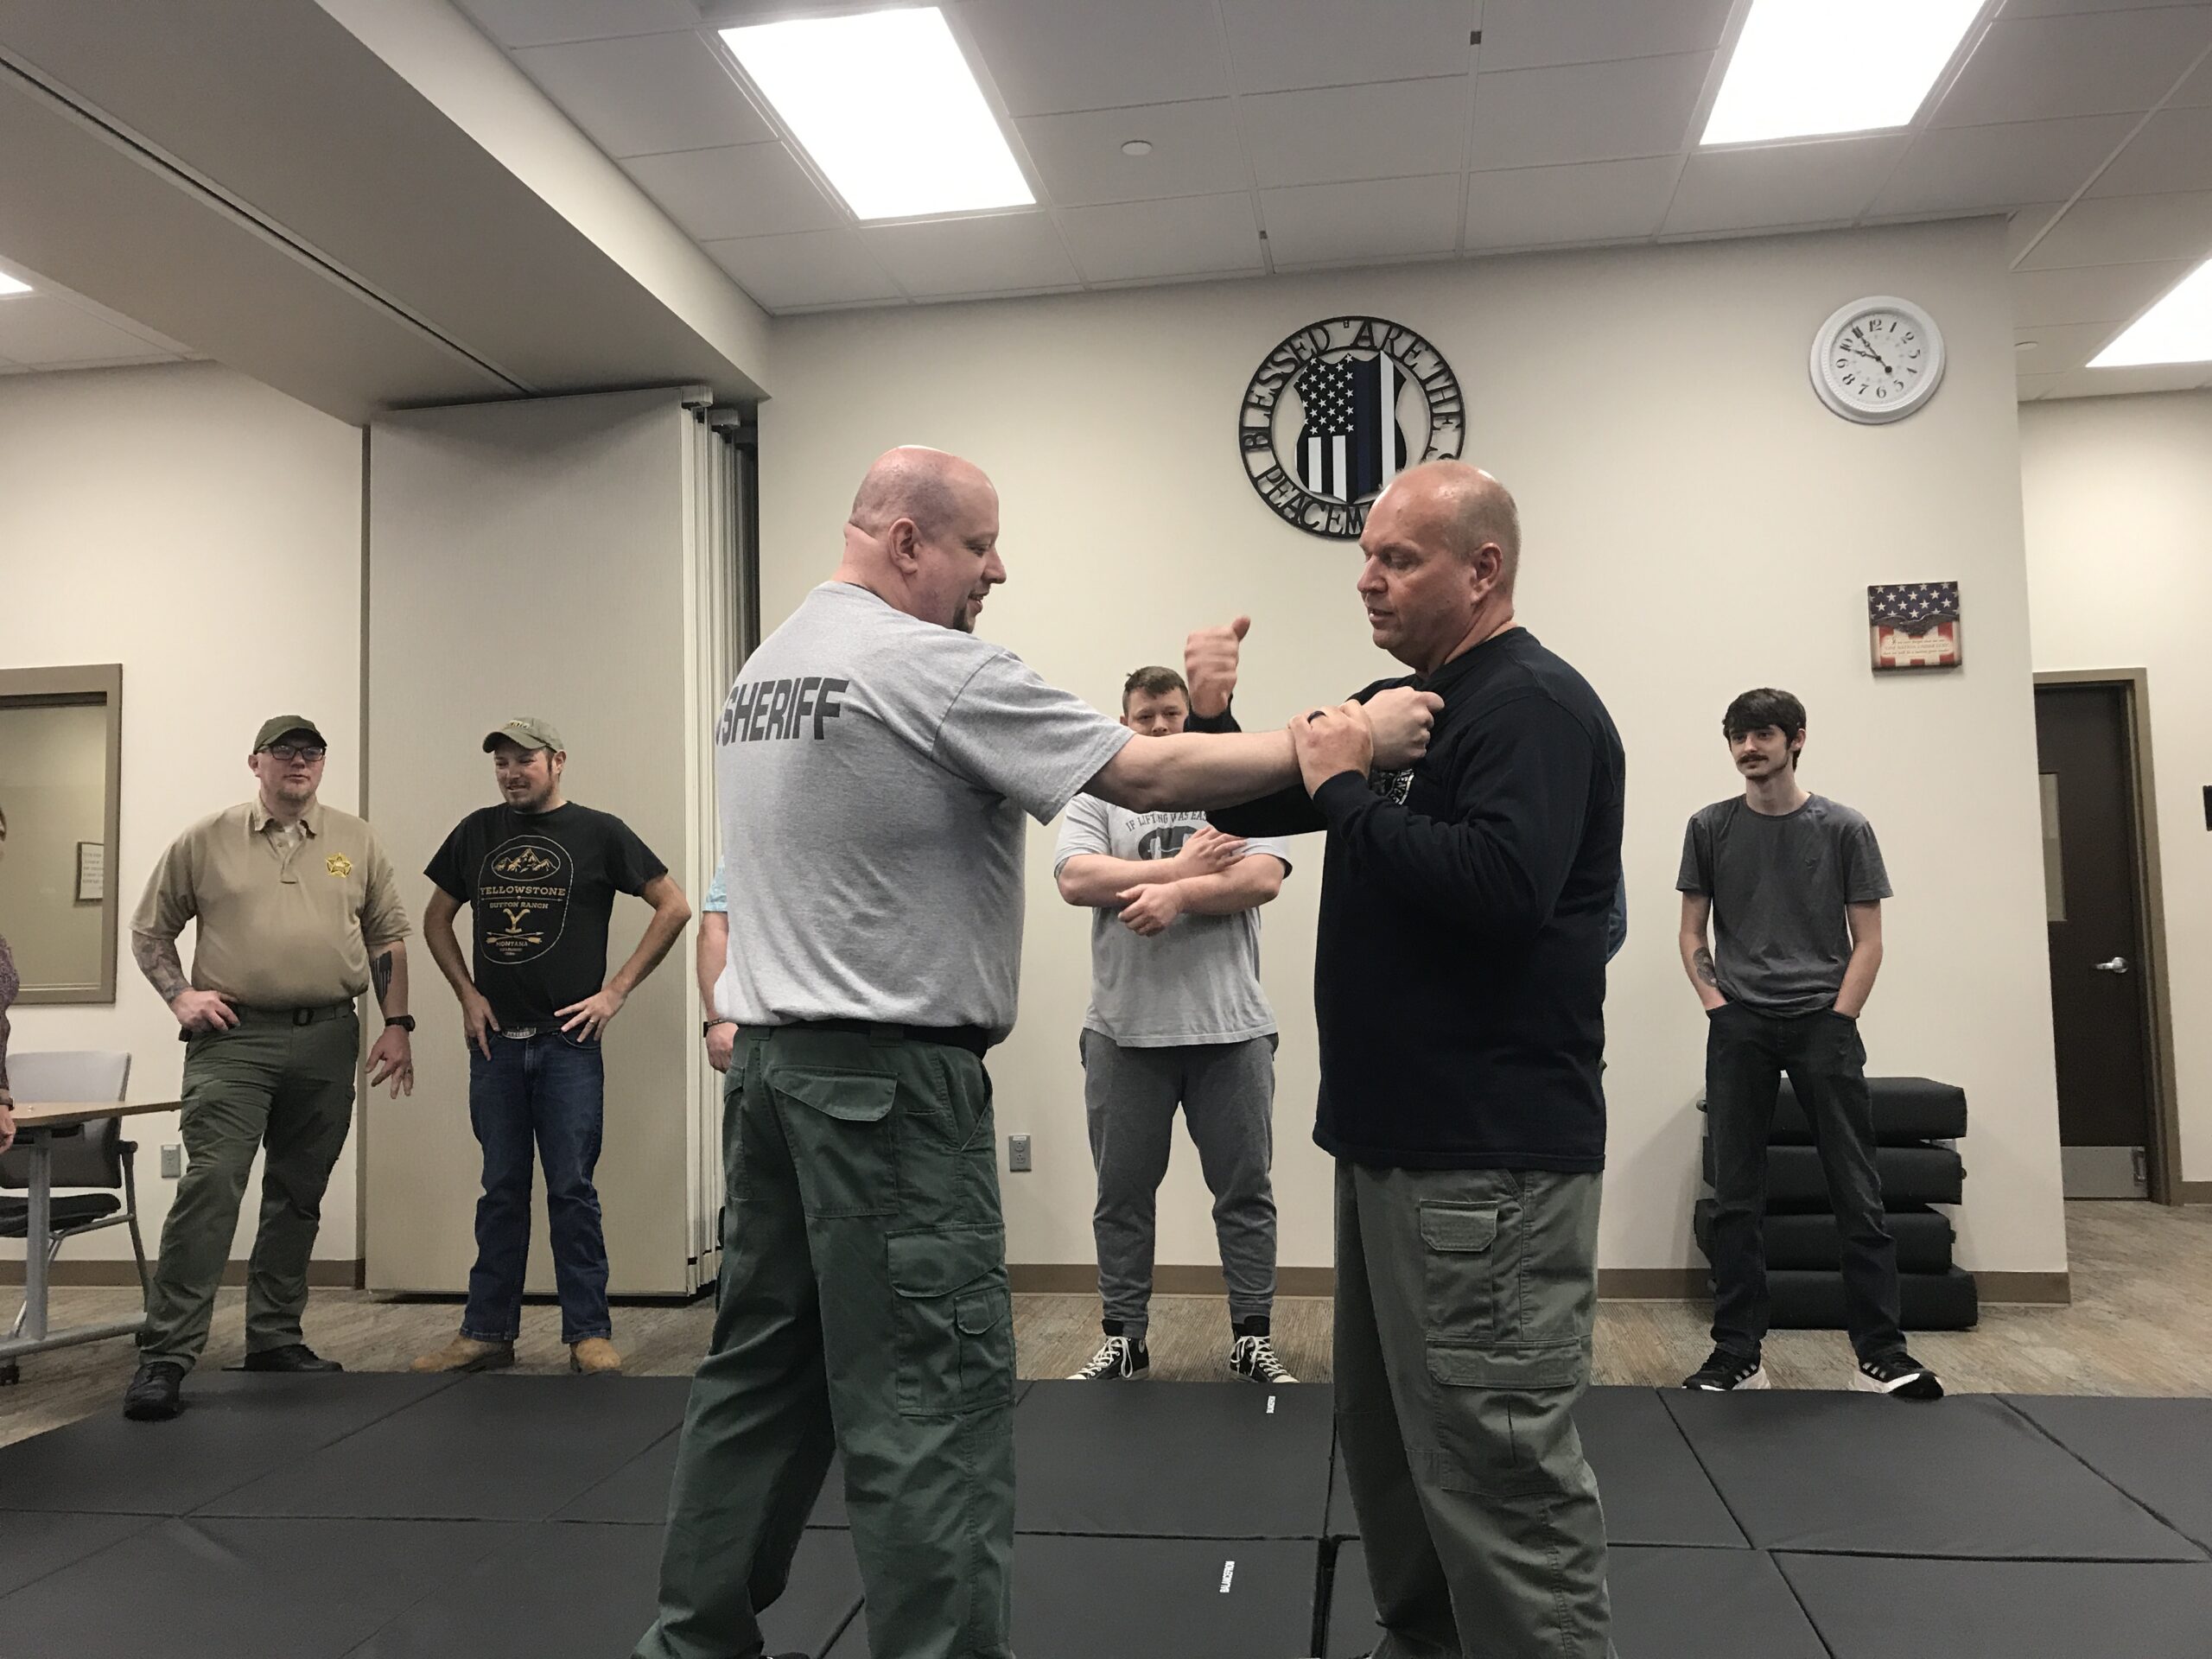 Training defensive techniques